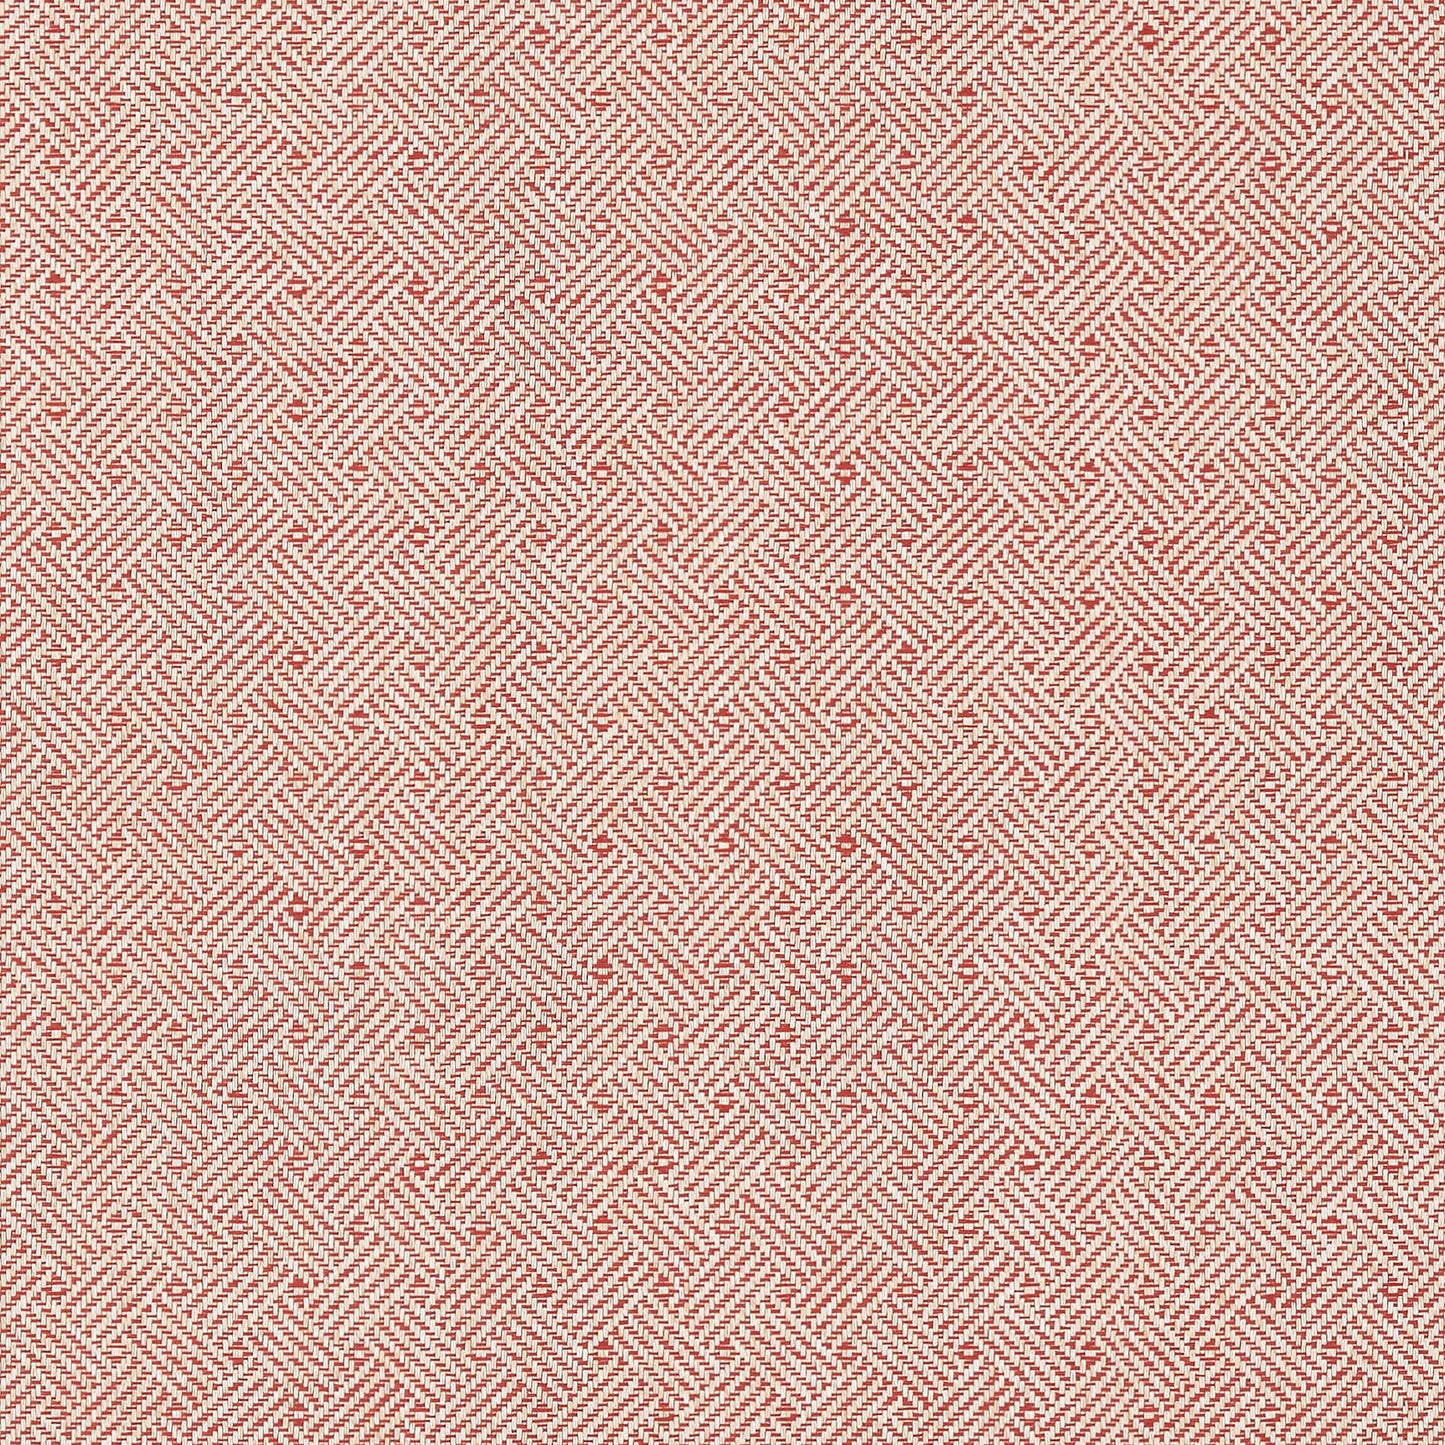 Thibaut Dynasty Lattice Weave Wallpaper - Red